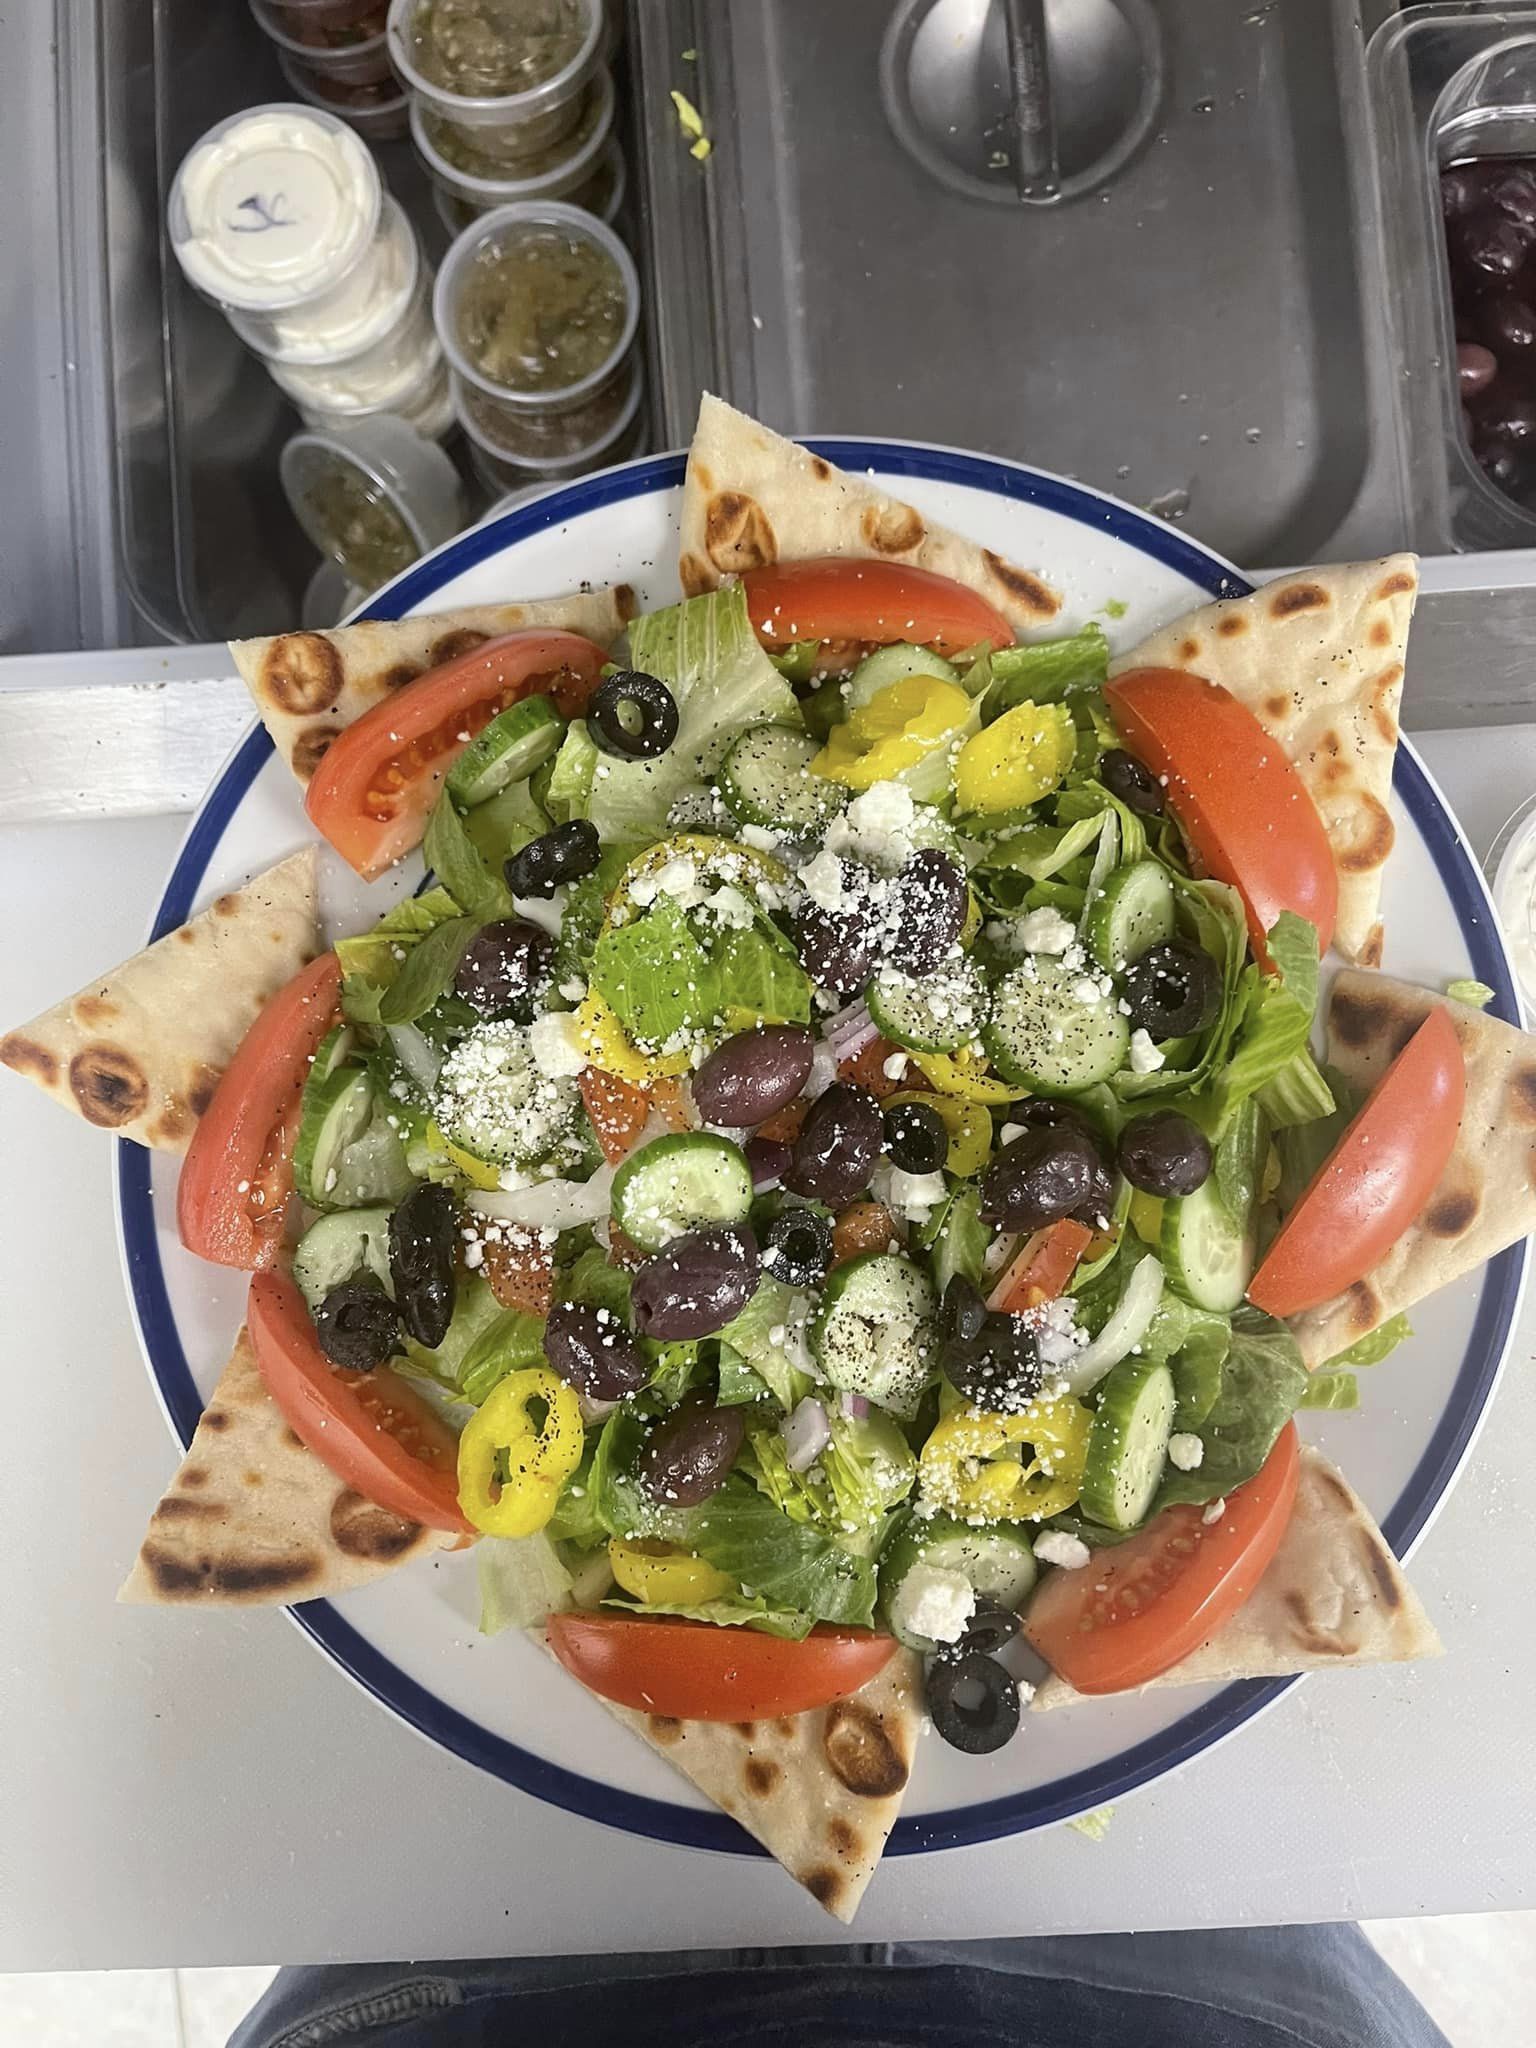 Dressed Greek salad inside ring of triangular pita slices